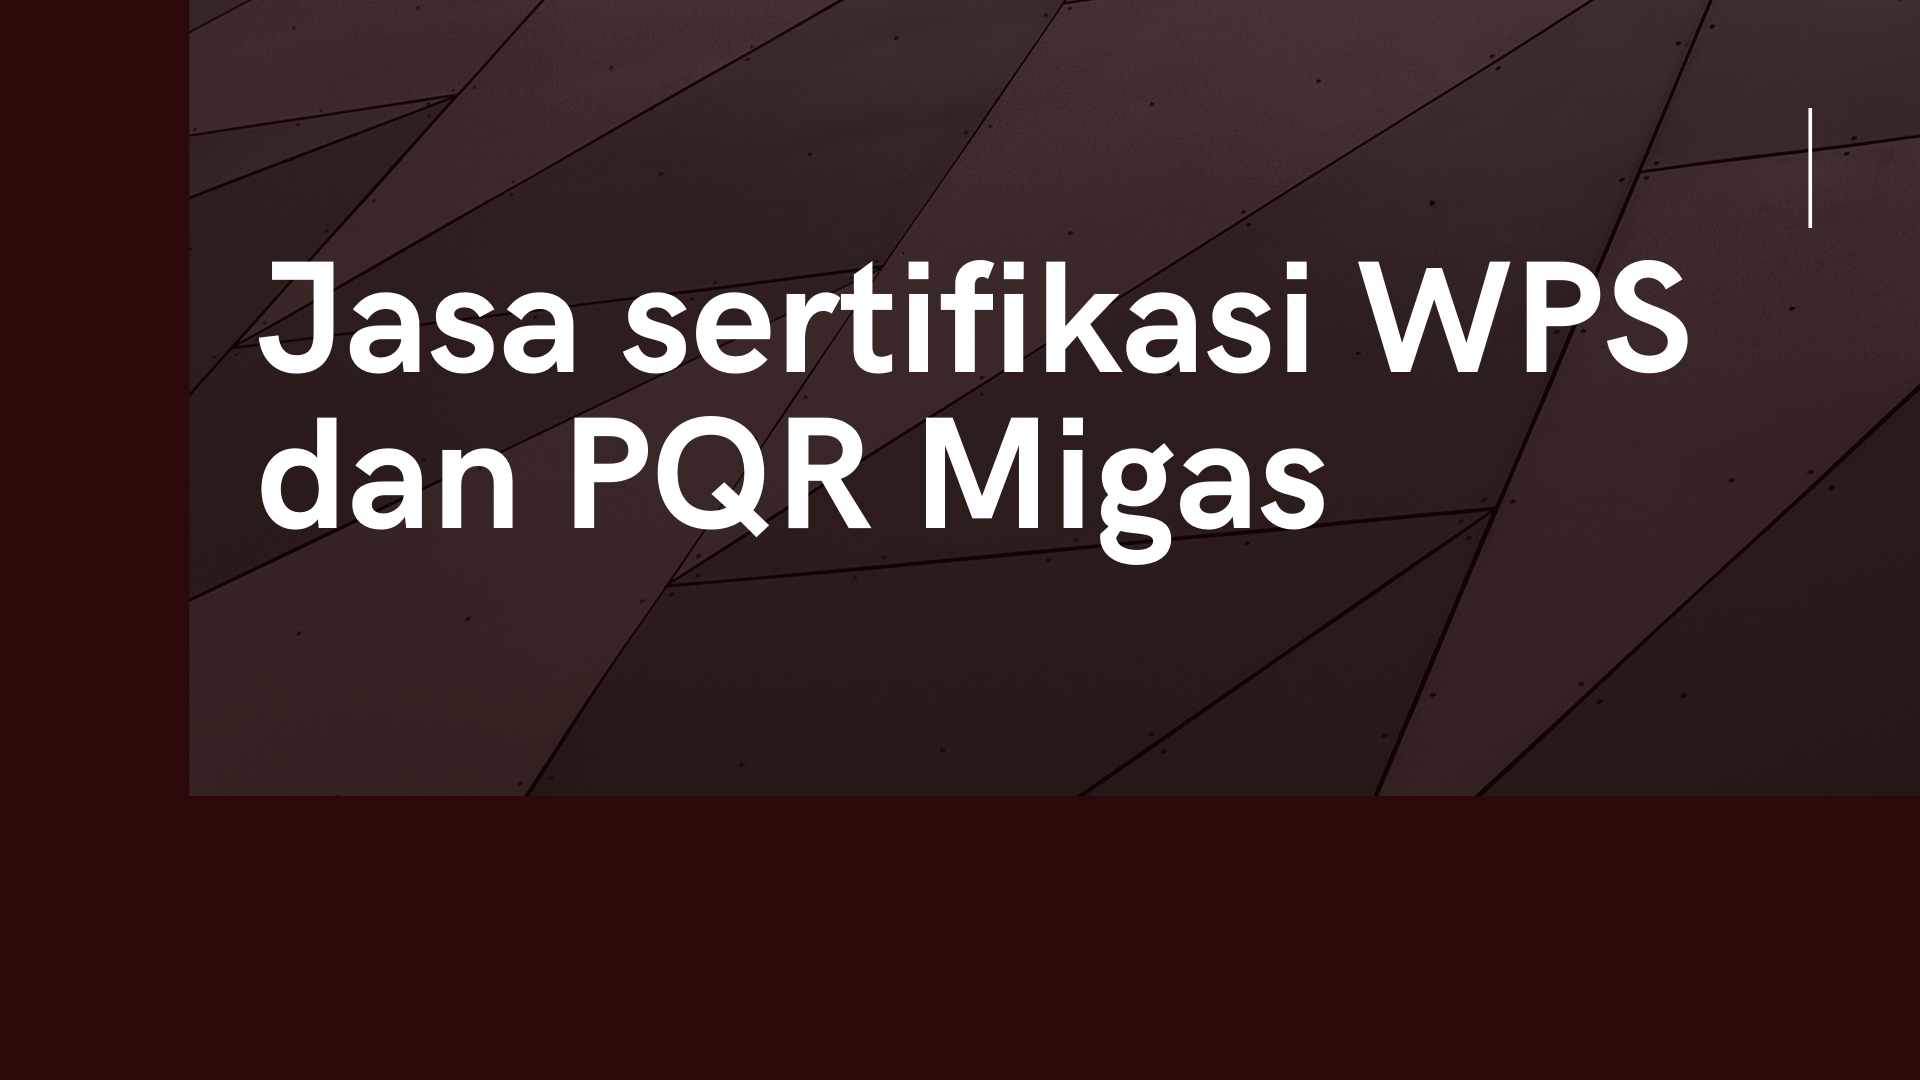 Jasa sertifikasi WPS dan PQR Migas